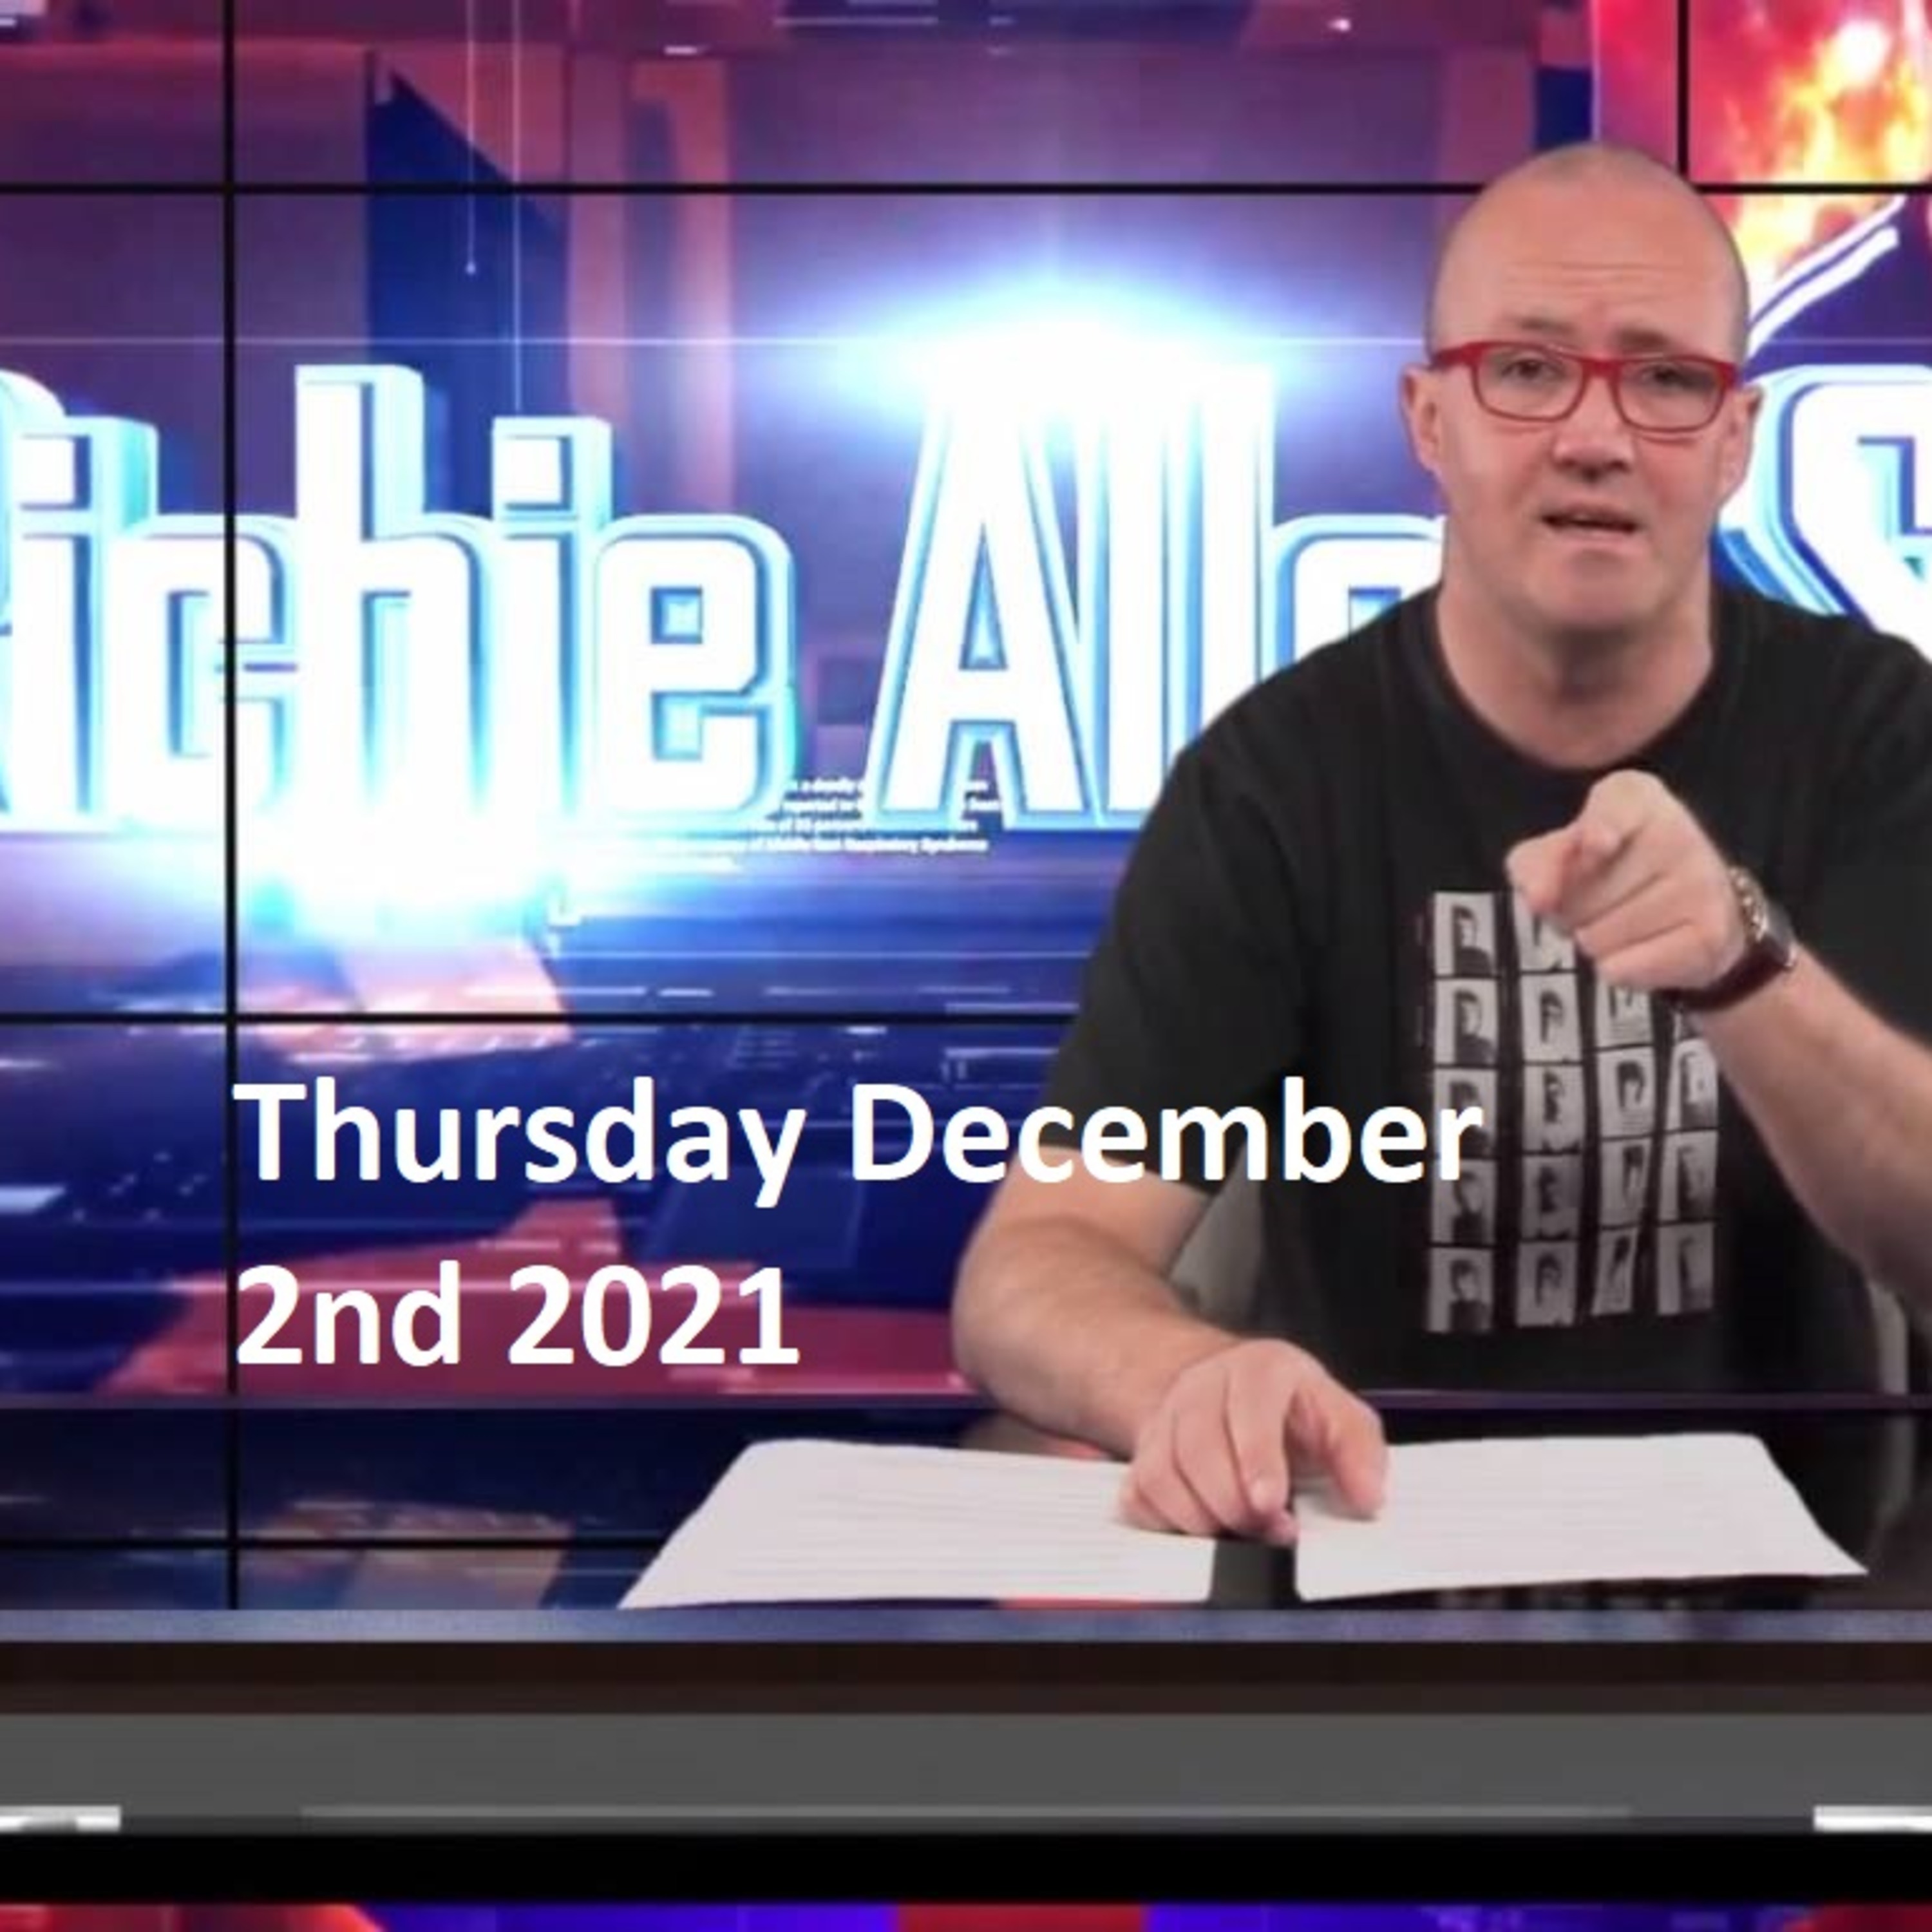 Episode 1375: The Richie Allen Show Thursday December 2nd 2021